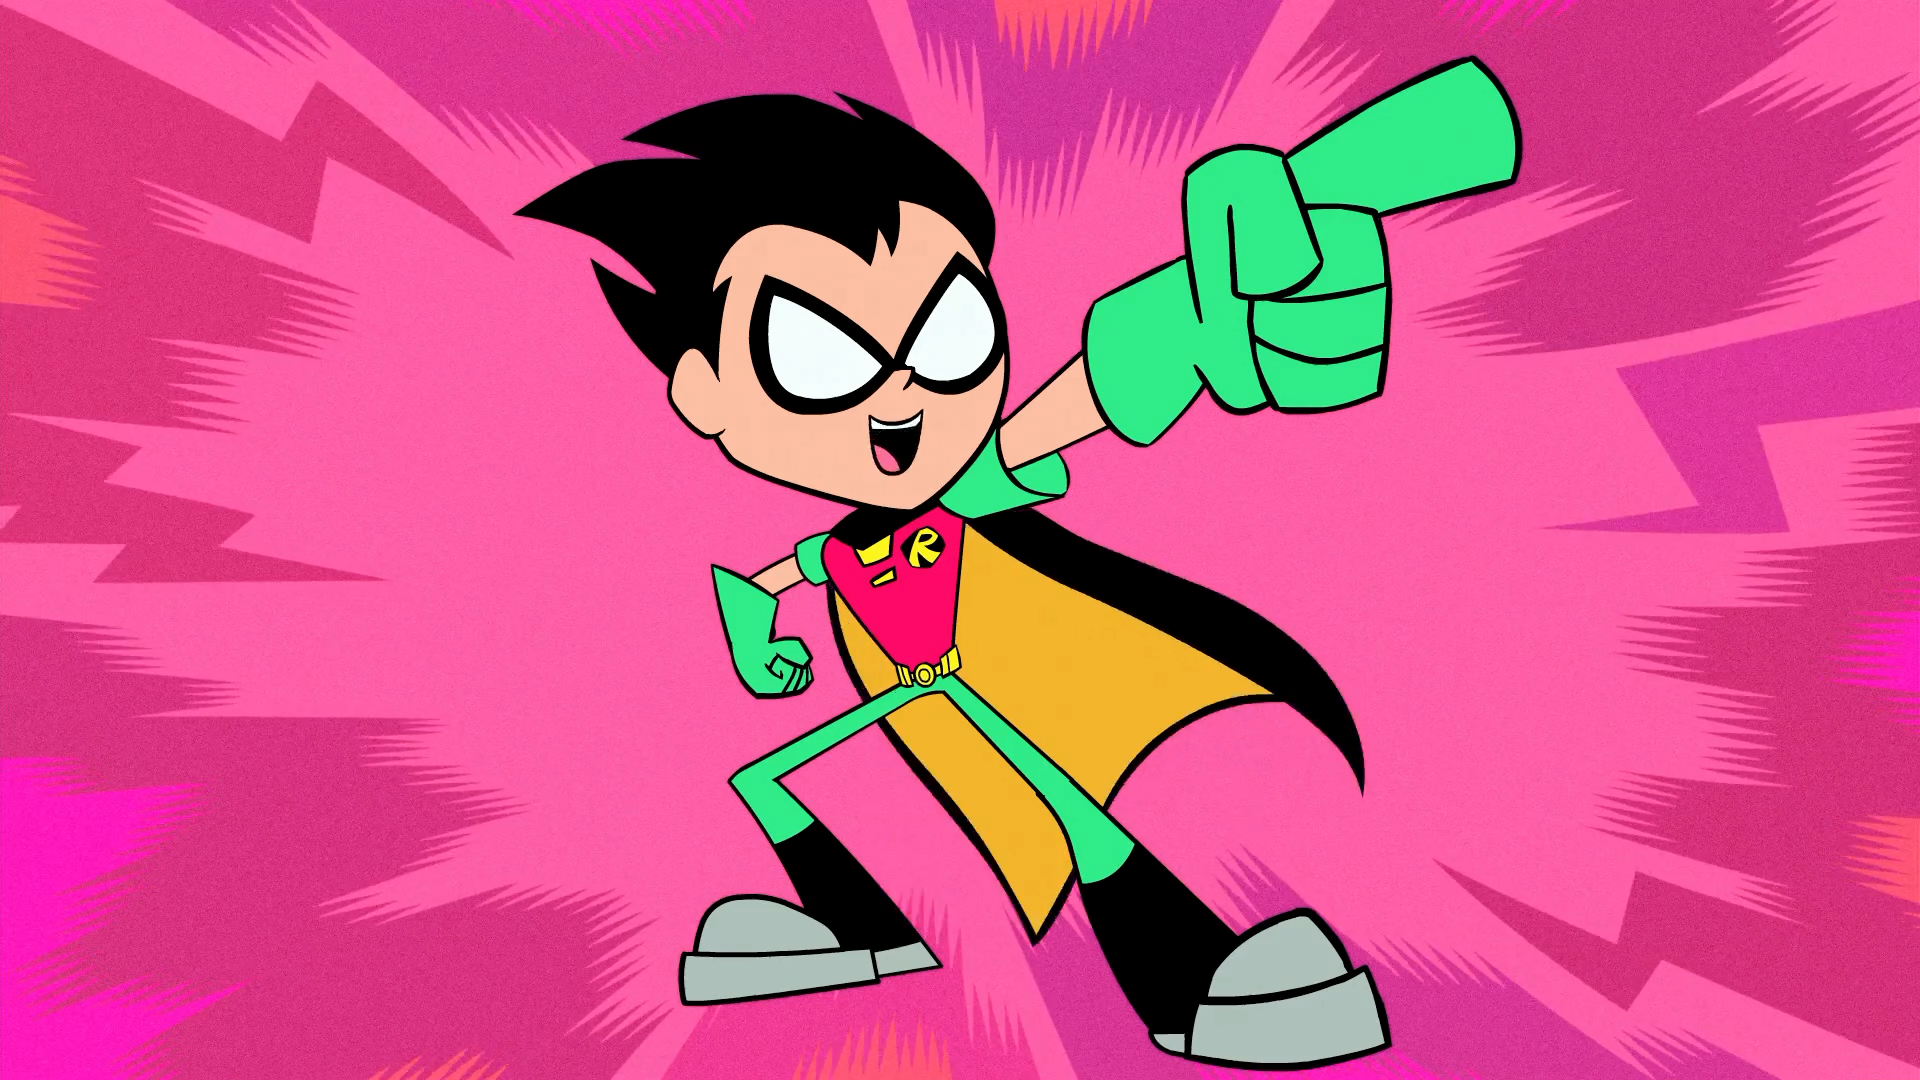 "Titans, go!" Robin's catchphrase. 